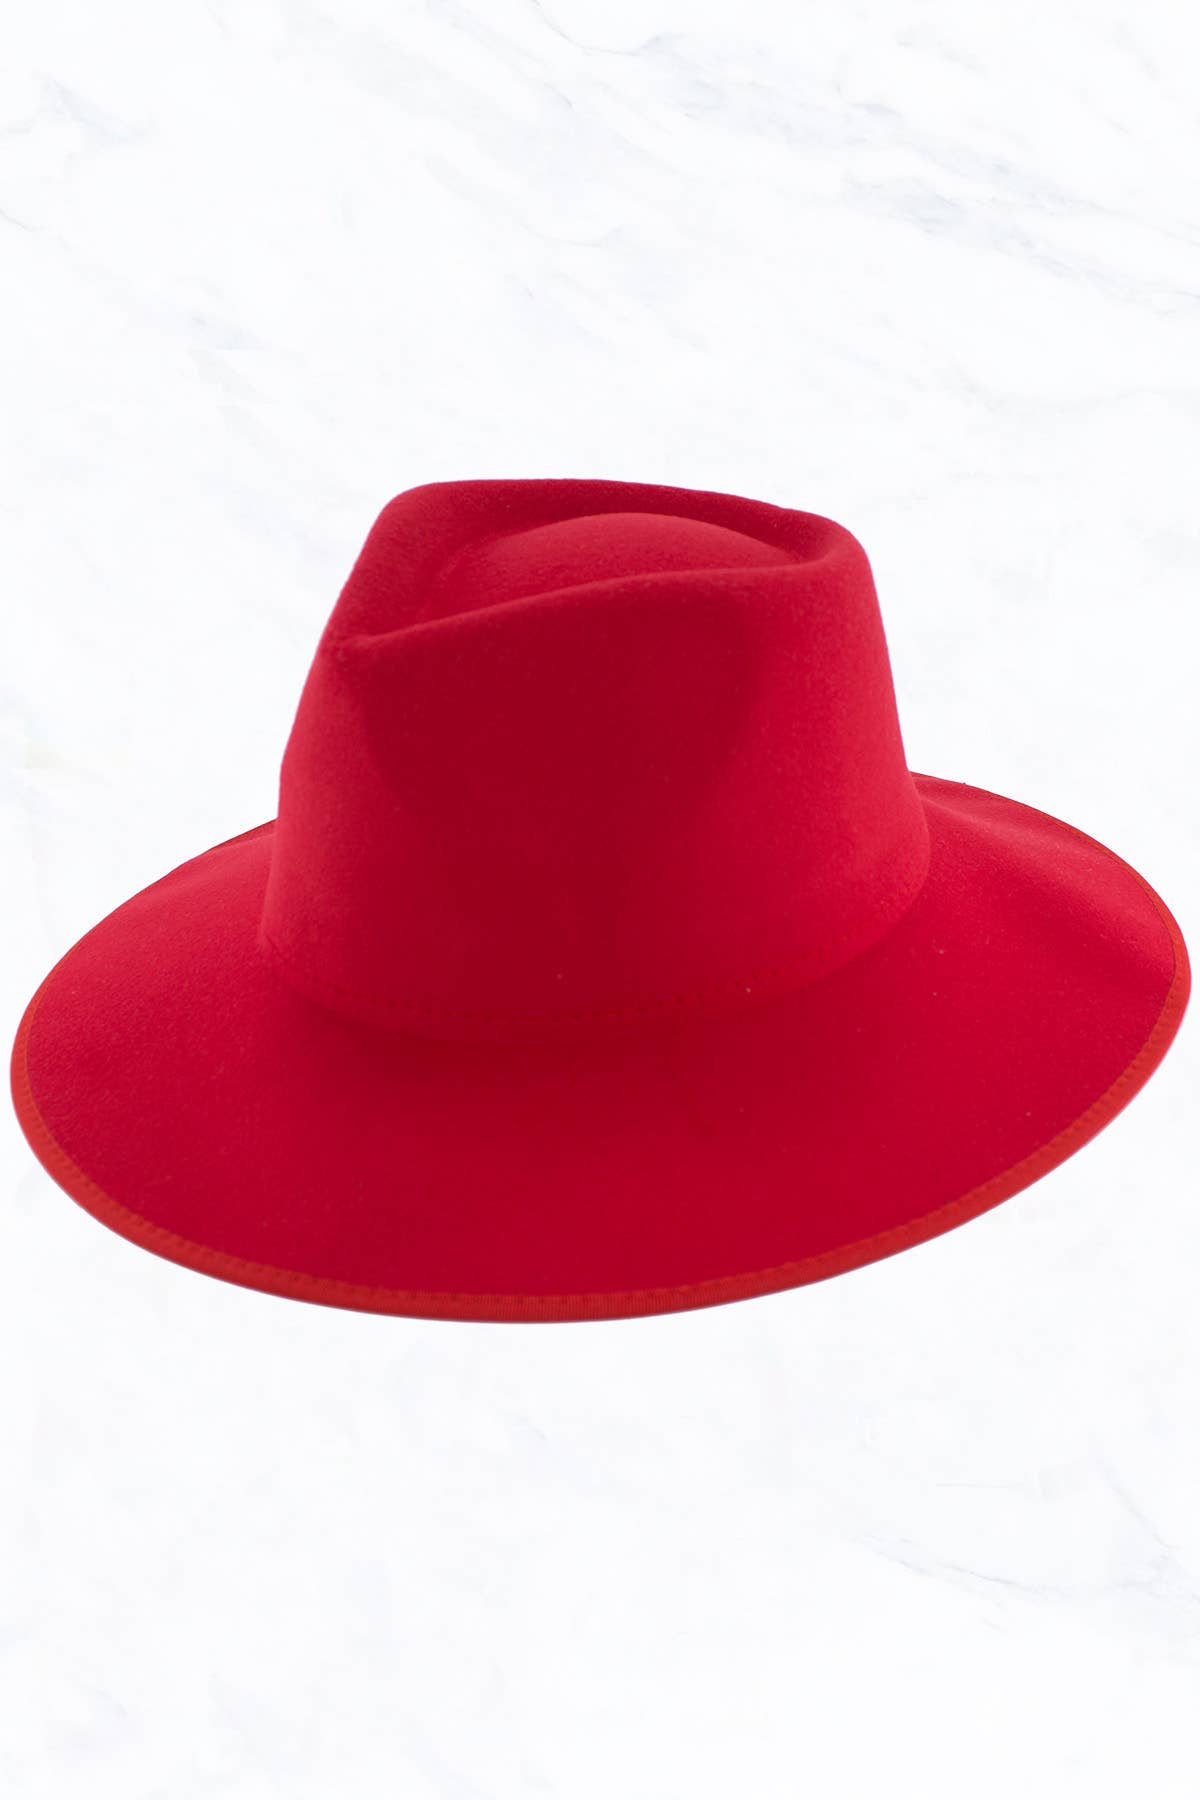 Wrap of Edge Teardrop Shape Top Big Brim Hat: Red